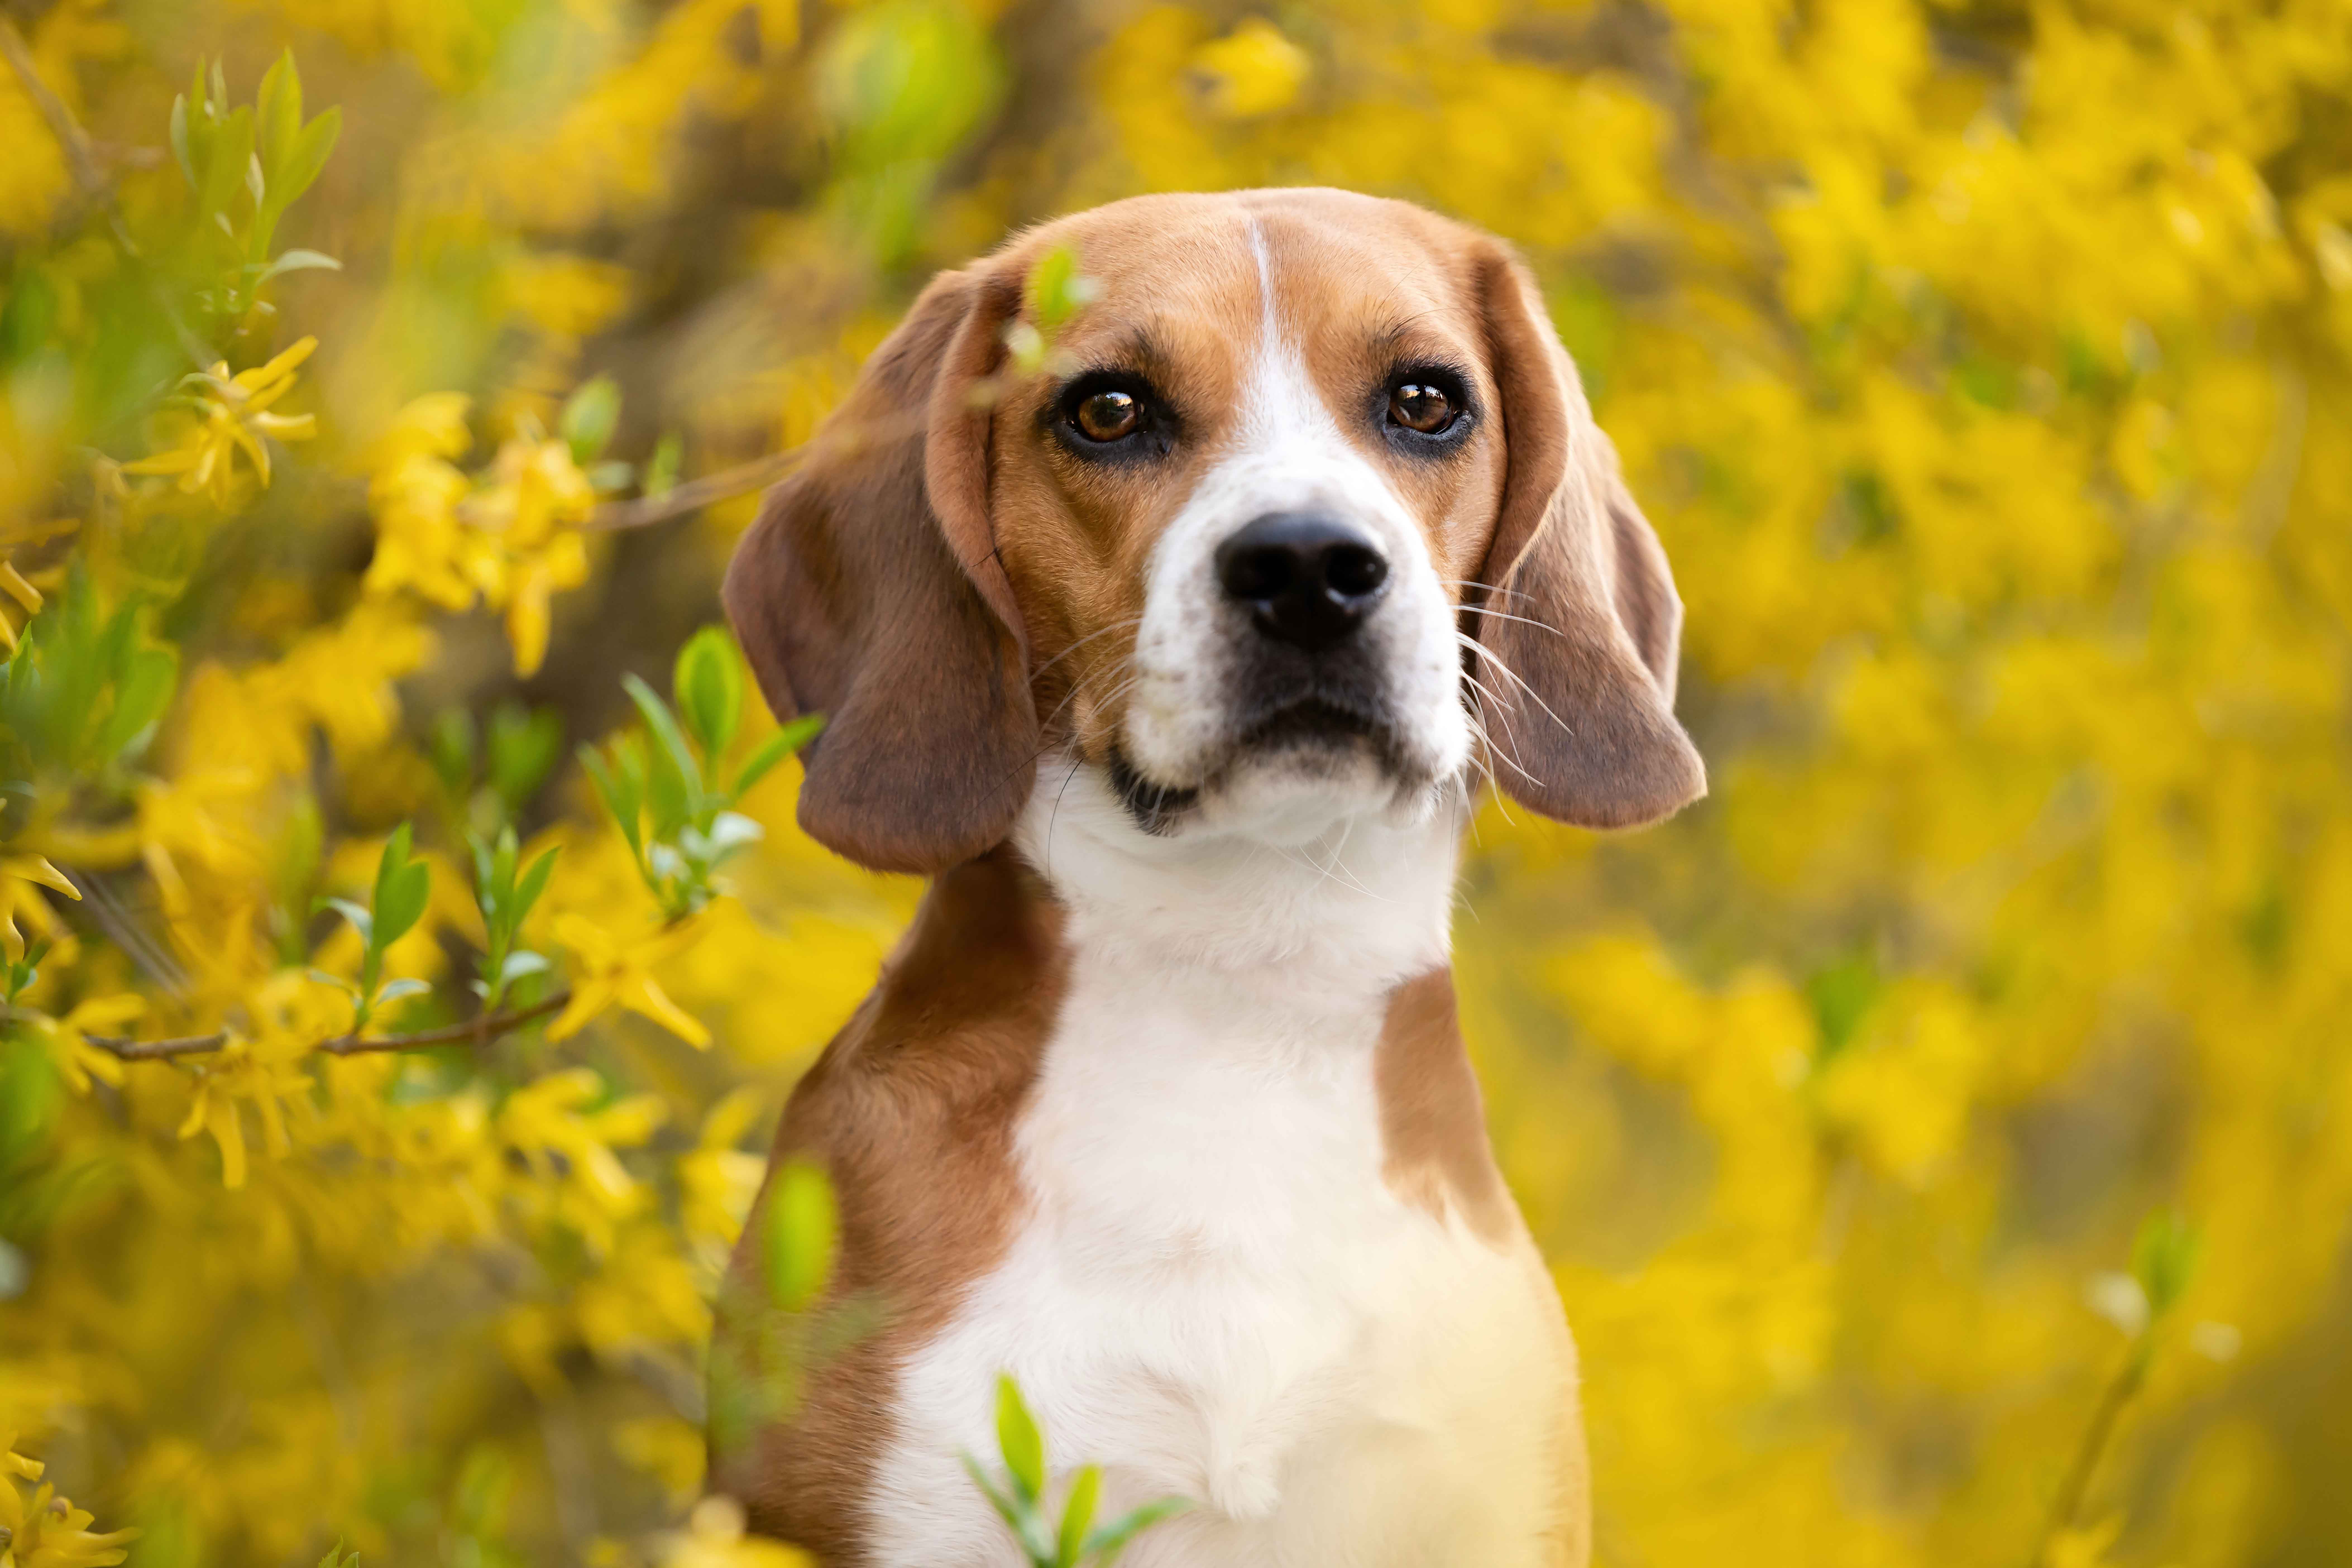 Spring portrait of a beagle dog